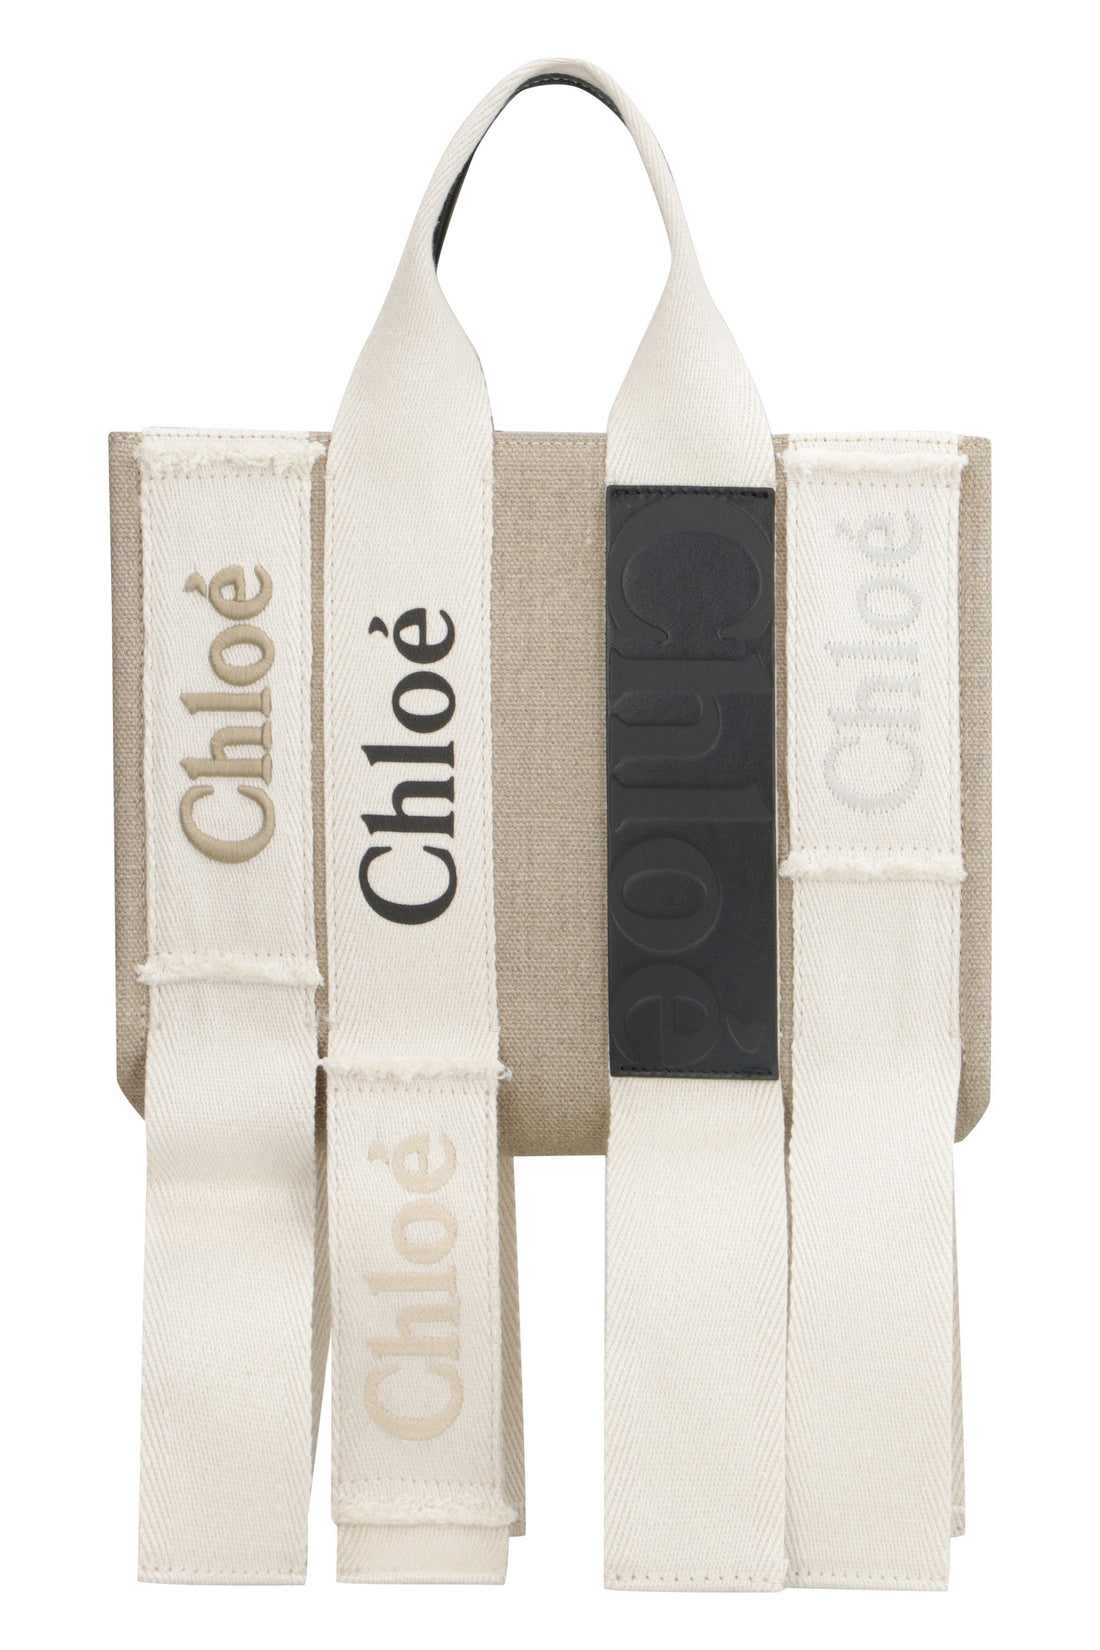 Chloé-OUTLET-SALE-Woody canvas tote bag-ARCHIVIST